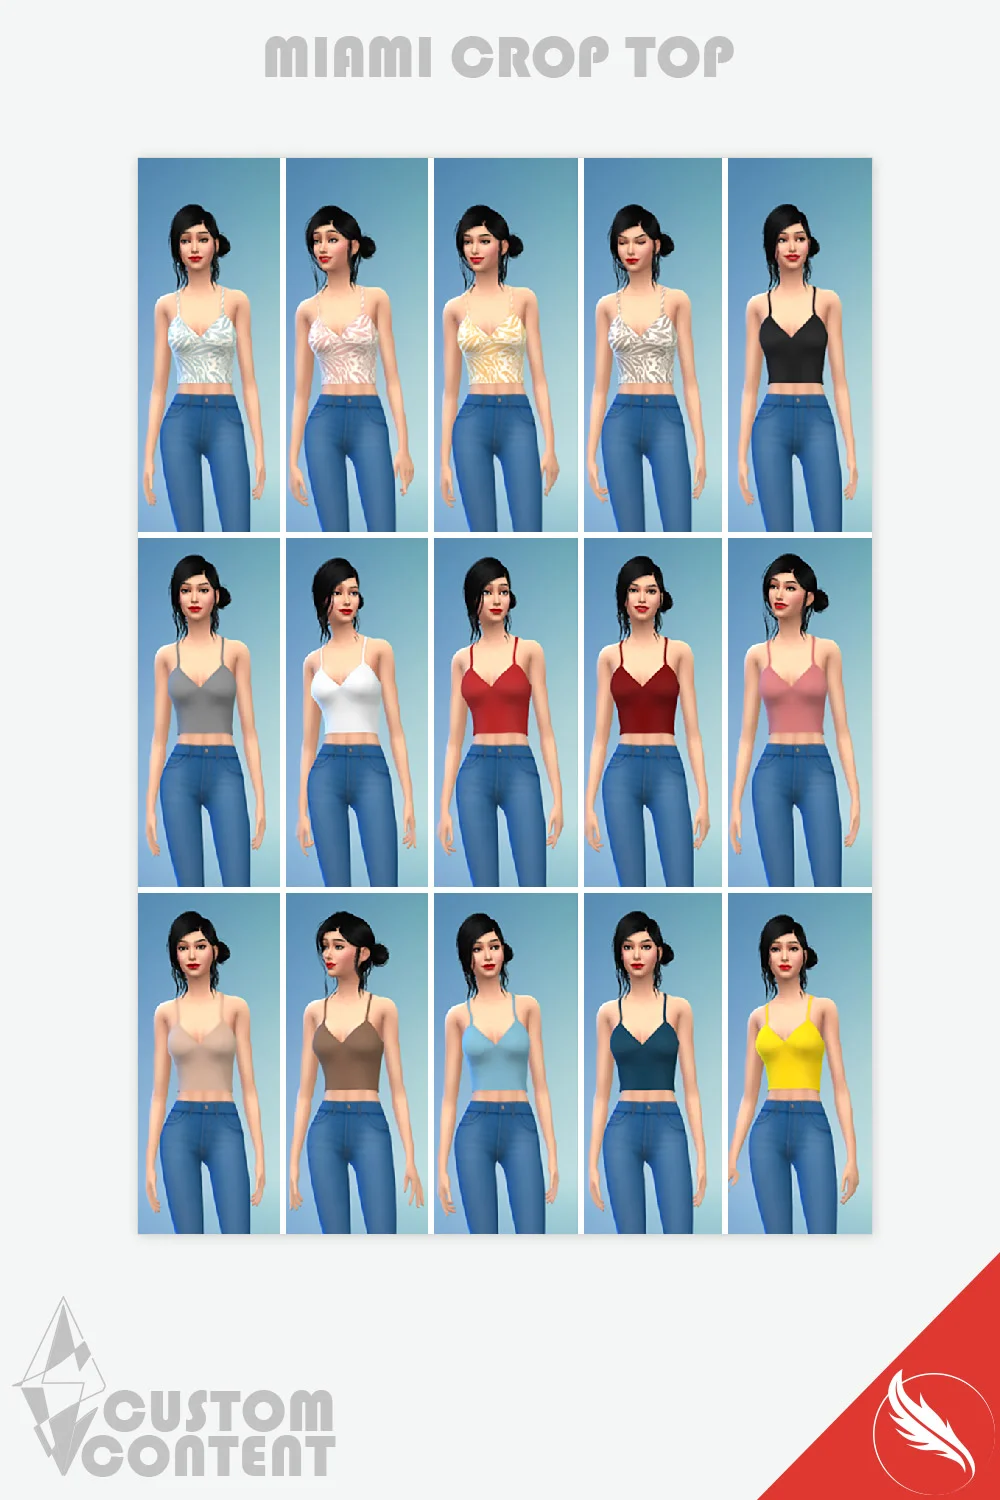 The Sims 4 Crop Top CC